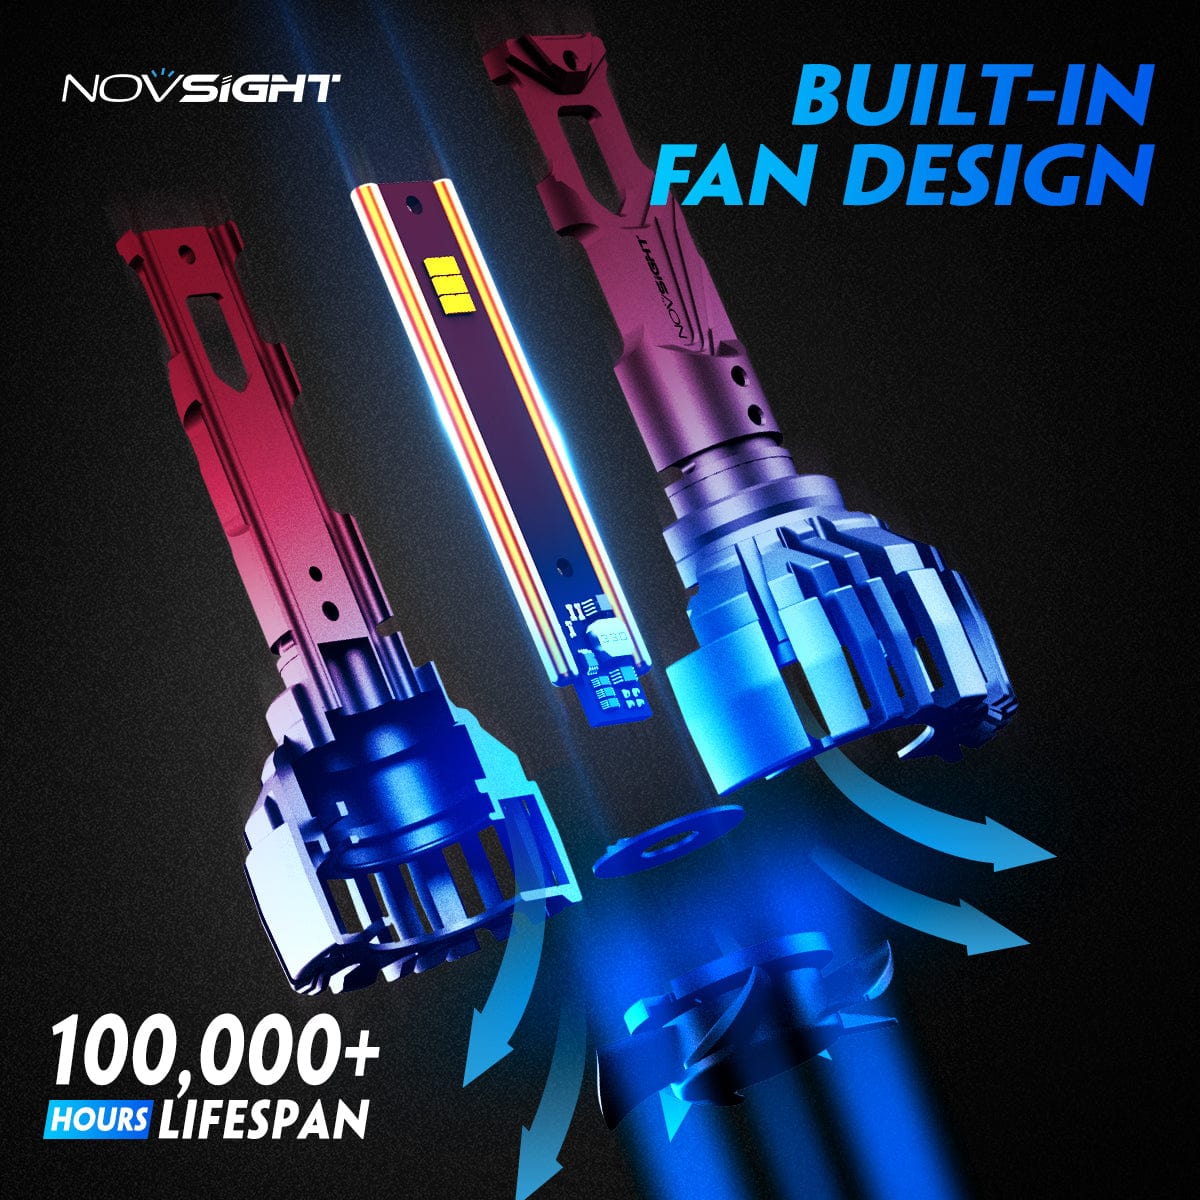 N67 Pro Series | 9005 9006 Combo LED Bulbs Intelligent Cooling System 140W 30000LM 6500K | 4 Bulbs - NOVSIGHT